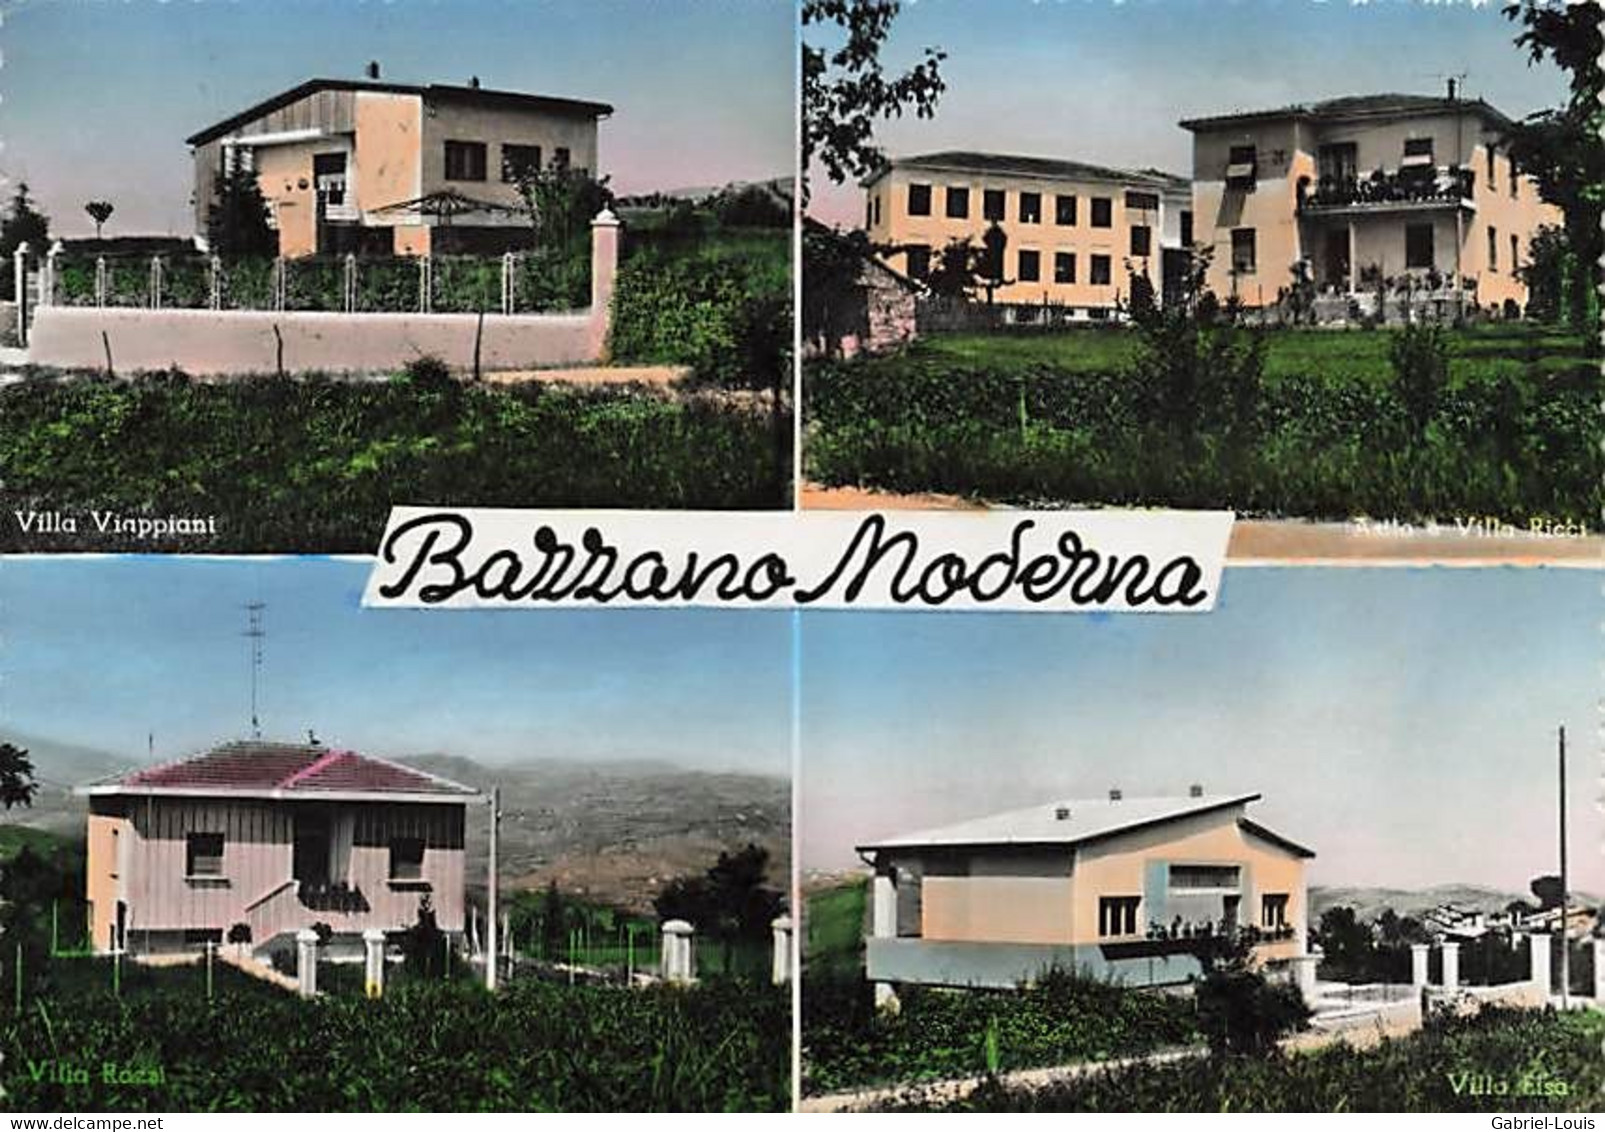 Bazzano Moderna  10 X 15 Cm - Bologna